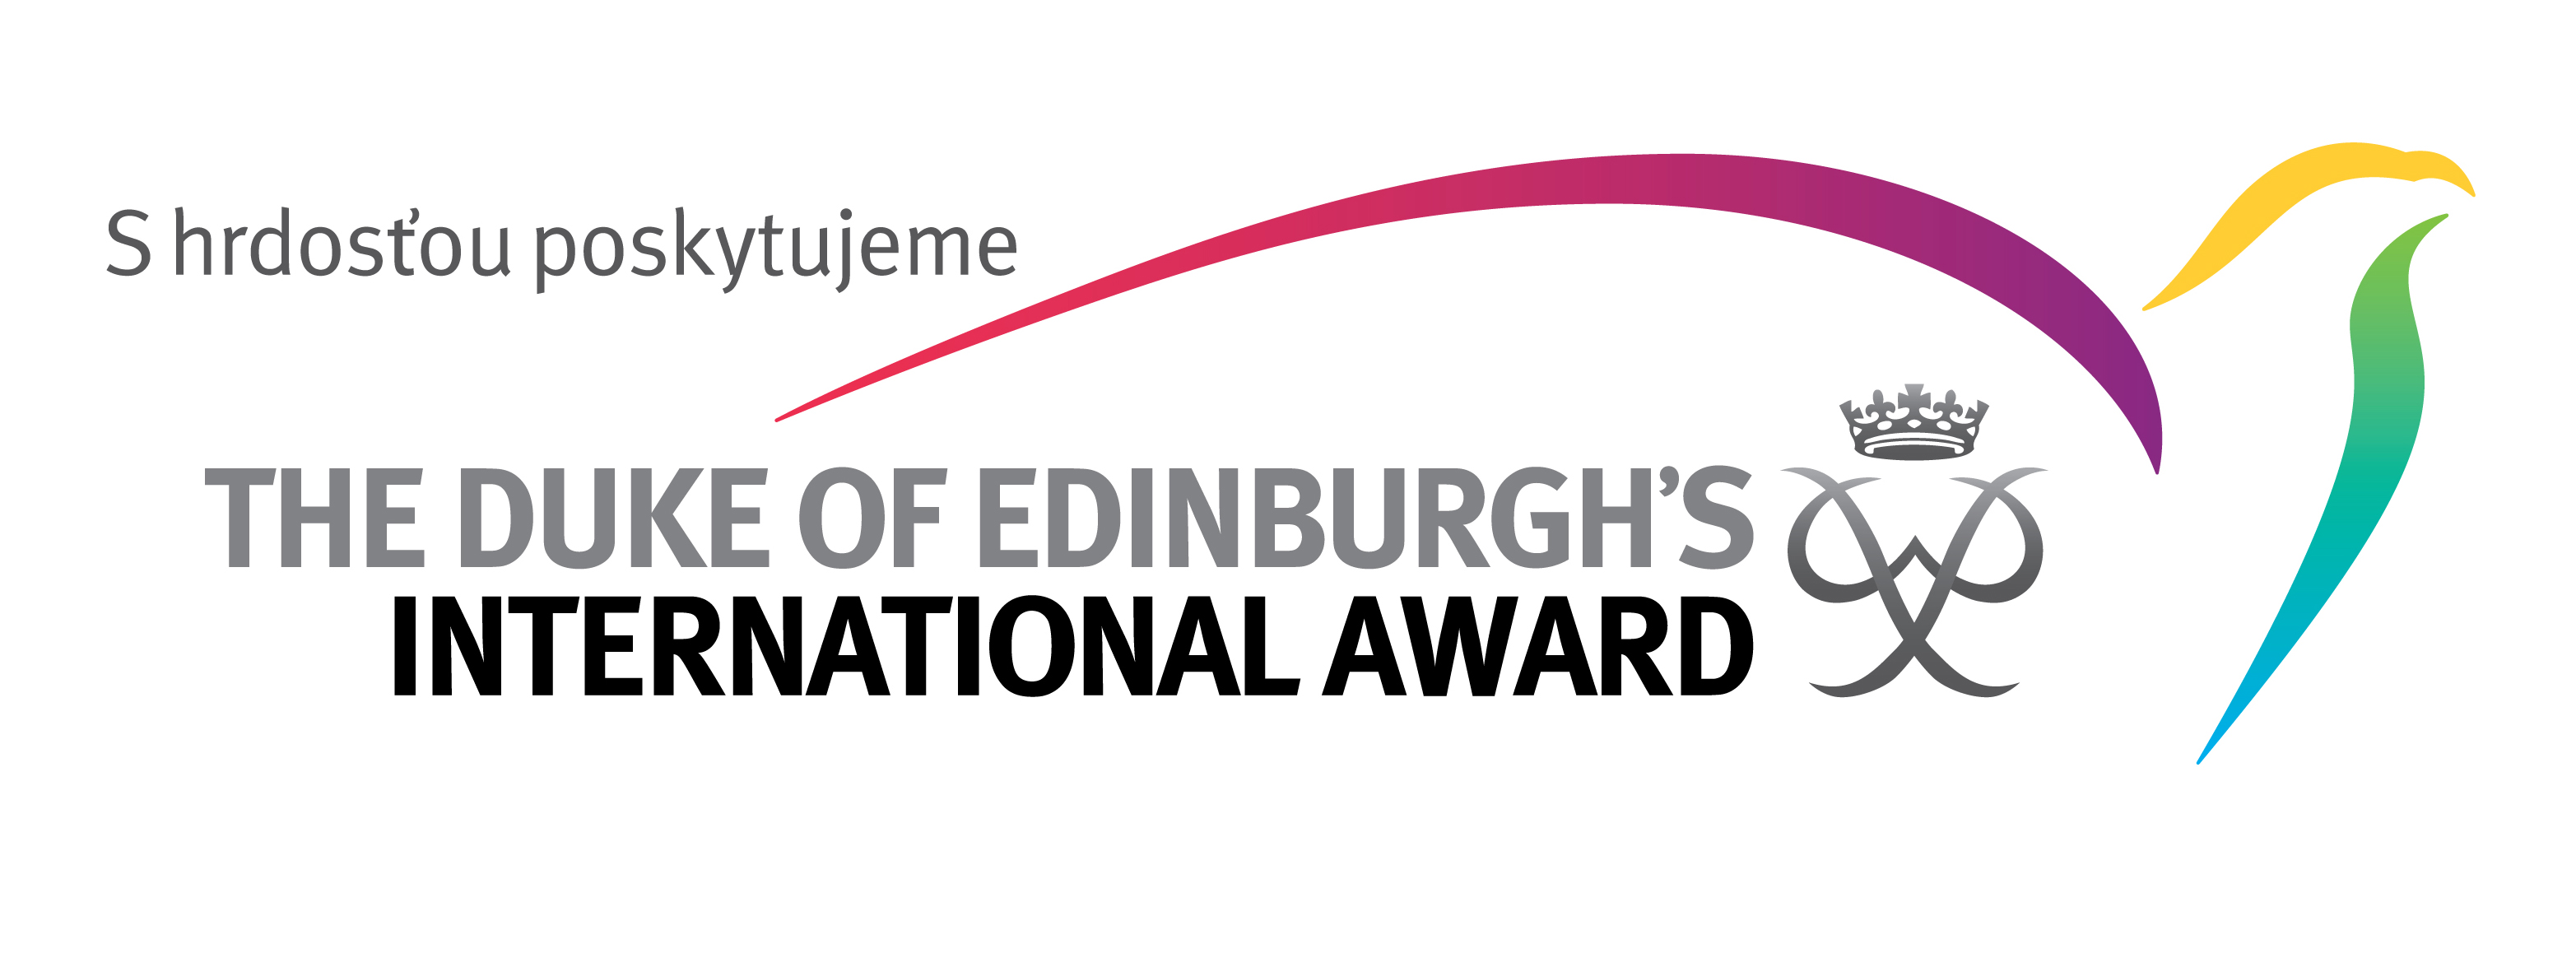 S hrdosťou poskytujeme Duke of Edinburgh's International Award